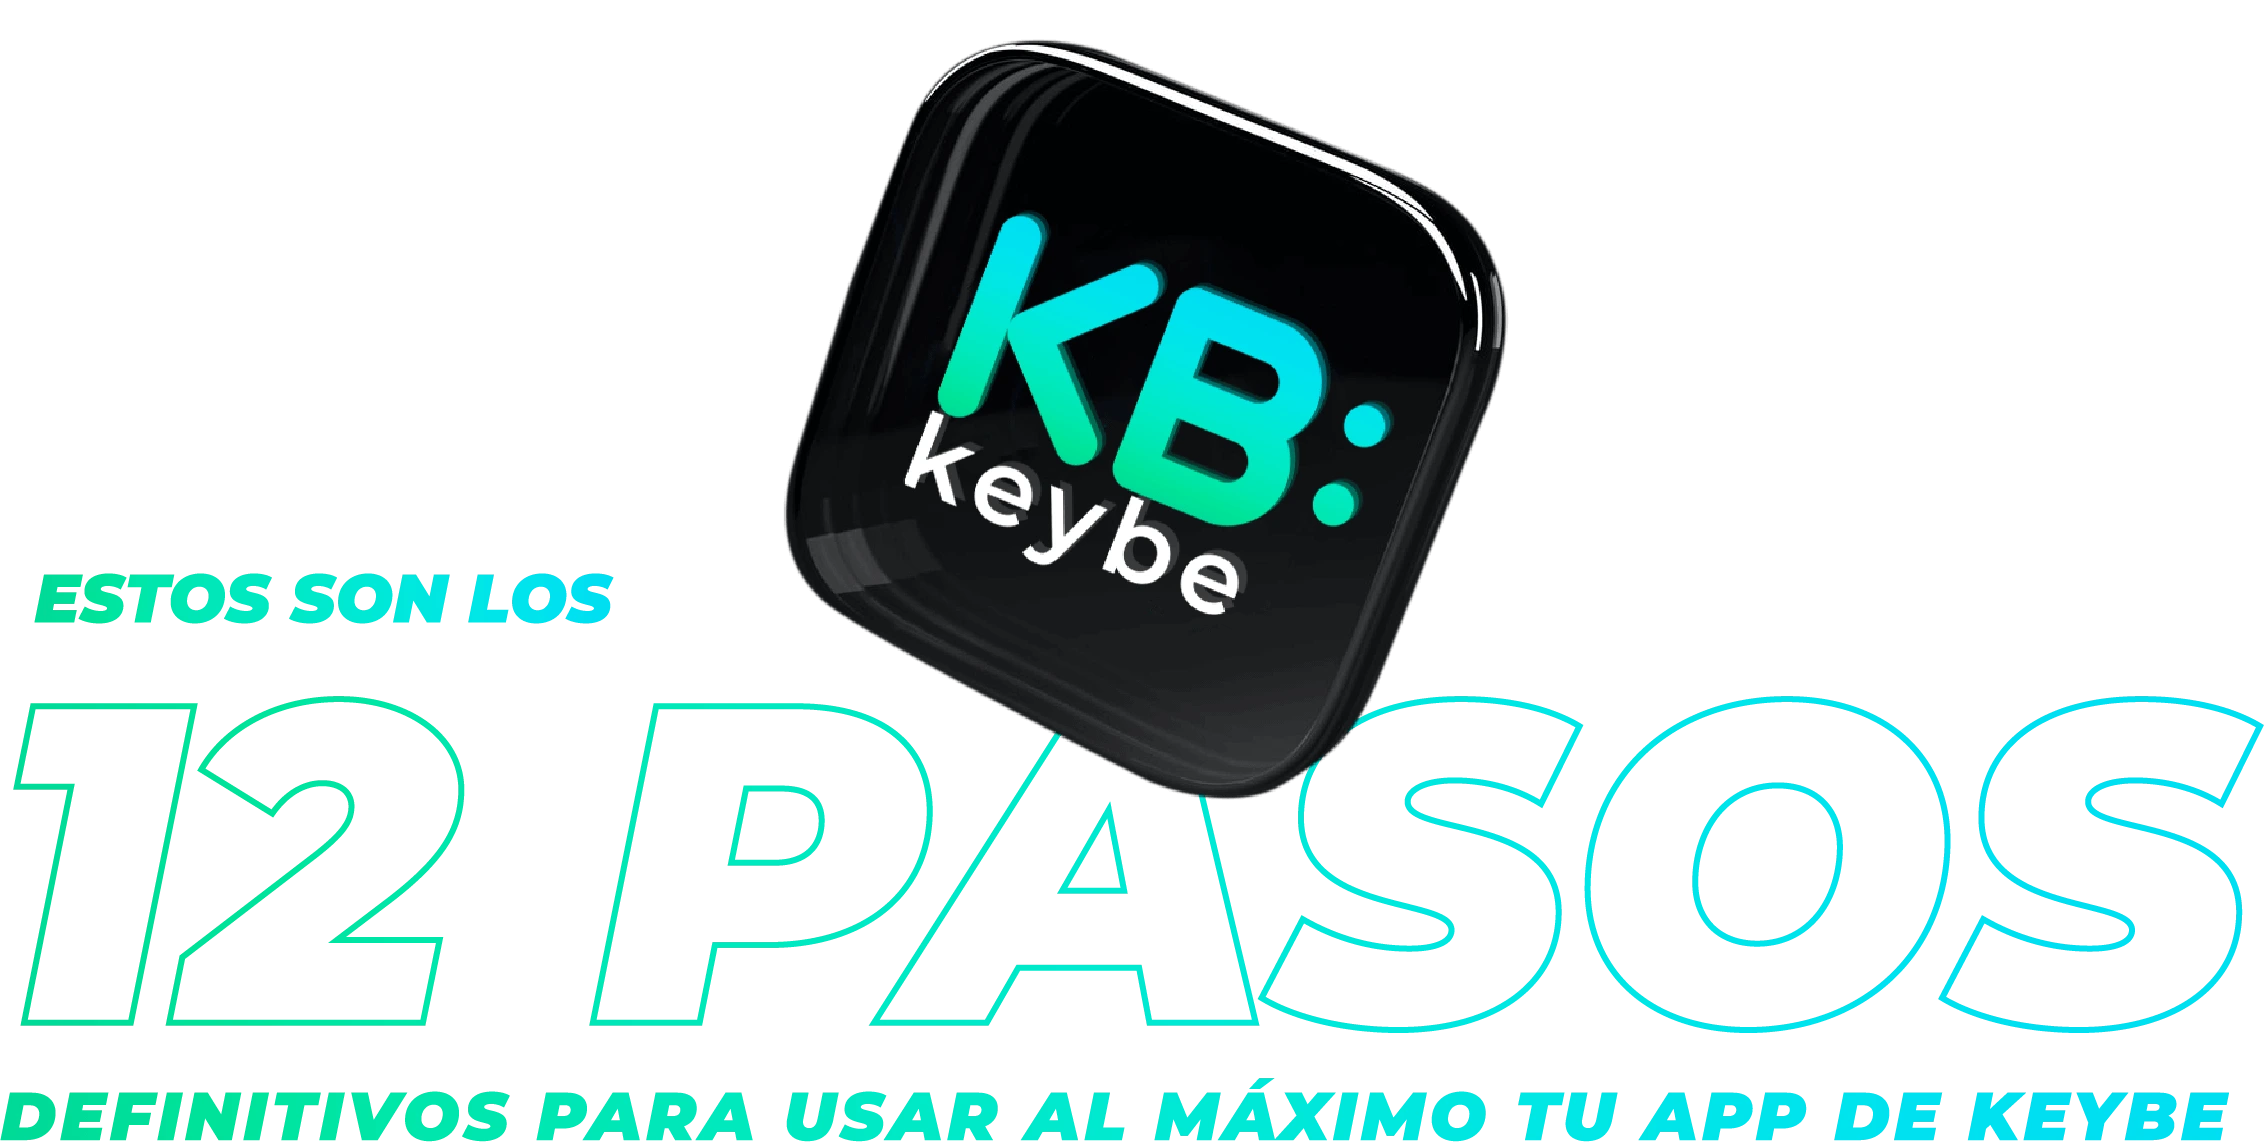 12 Pasos definitivos para usar al máximo tu app de KB: Keybe